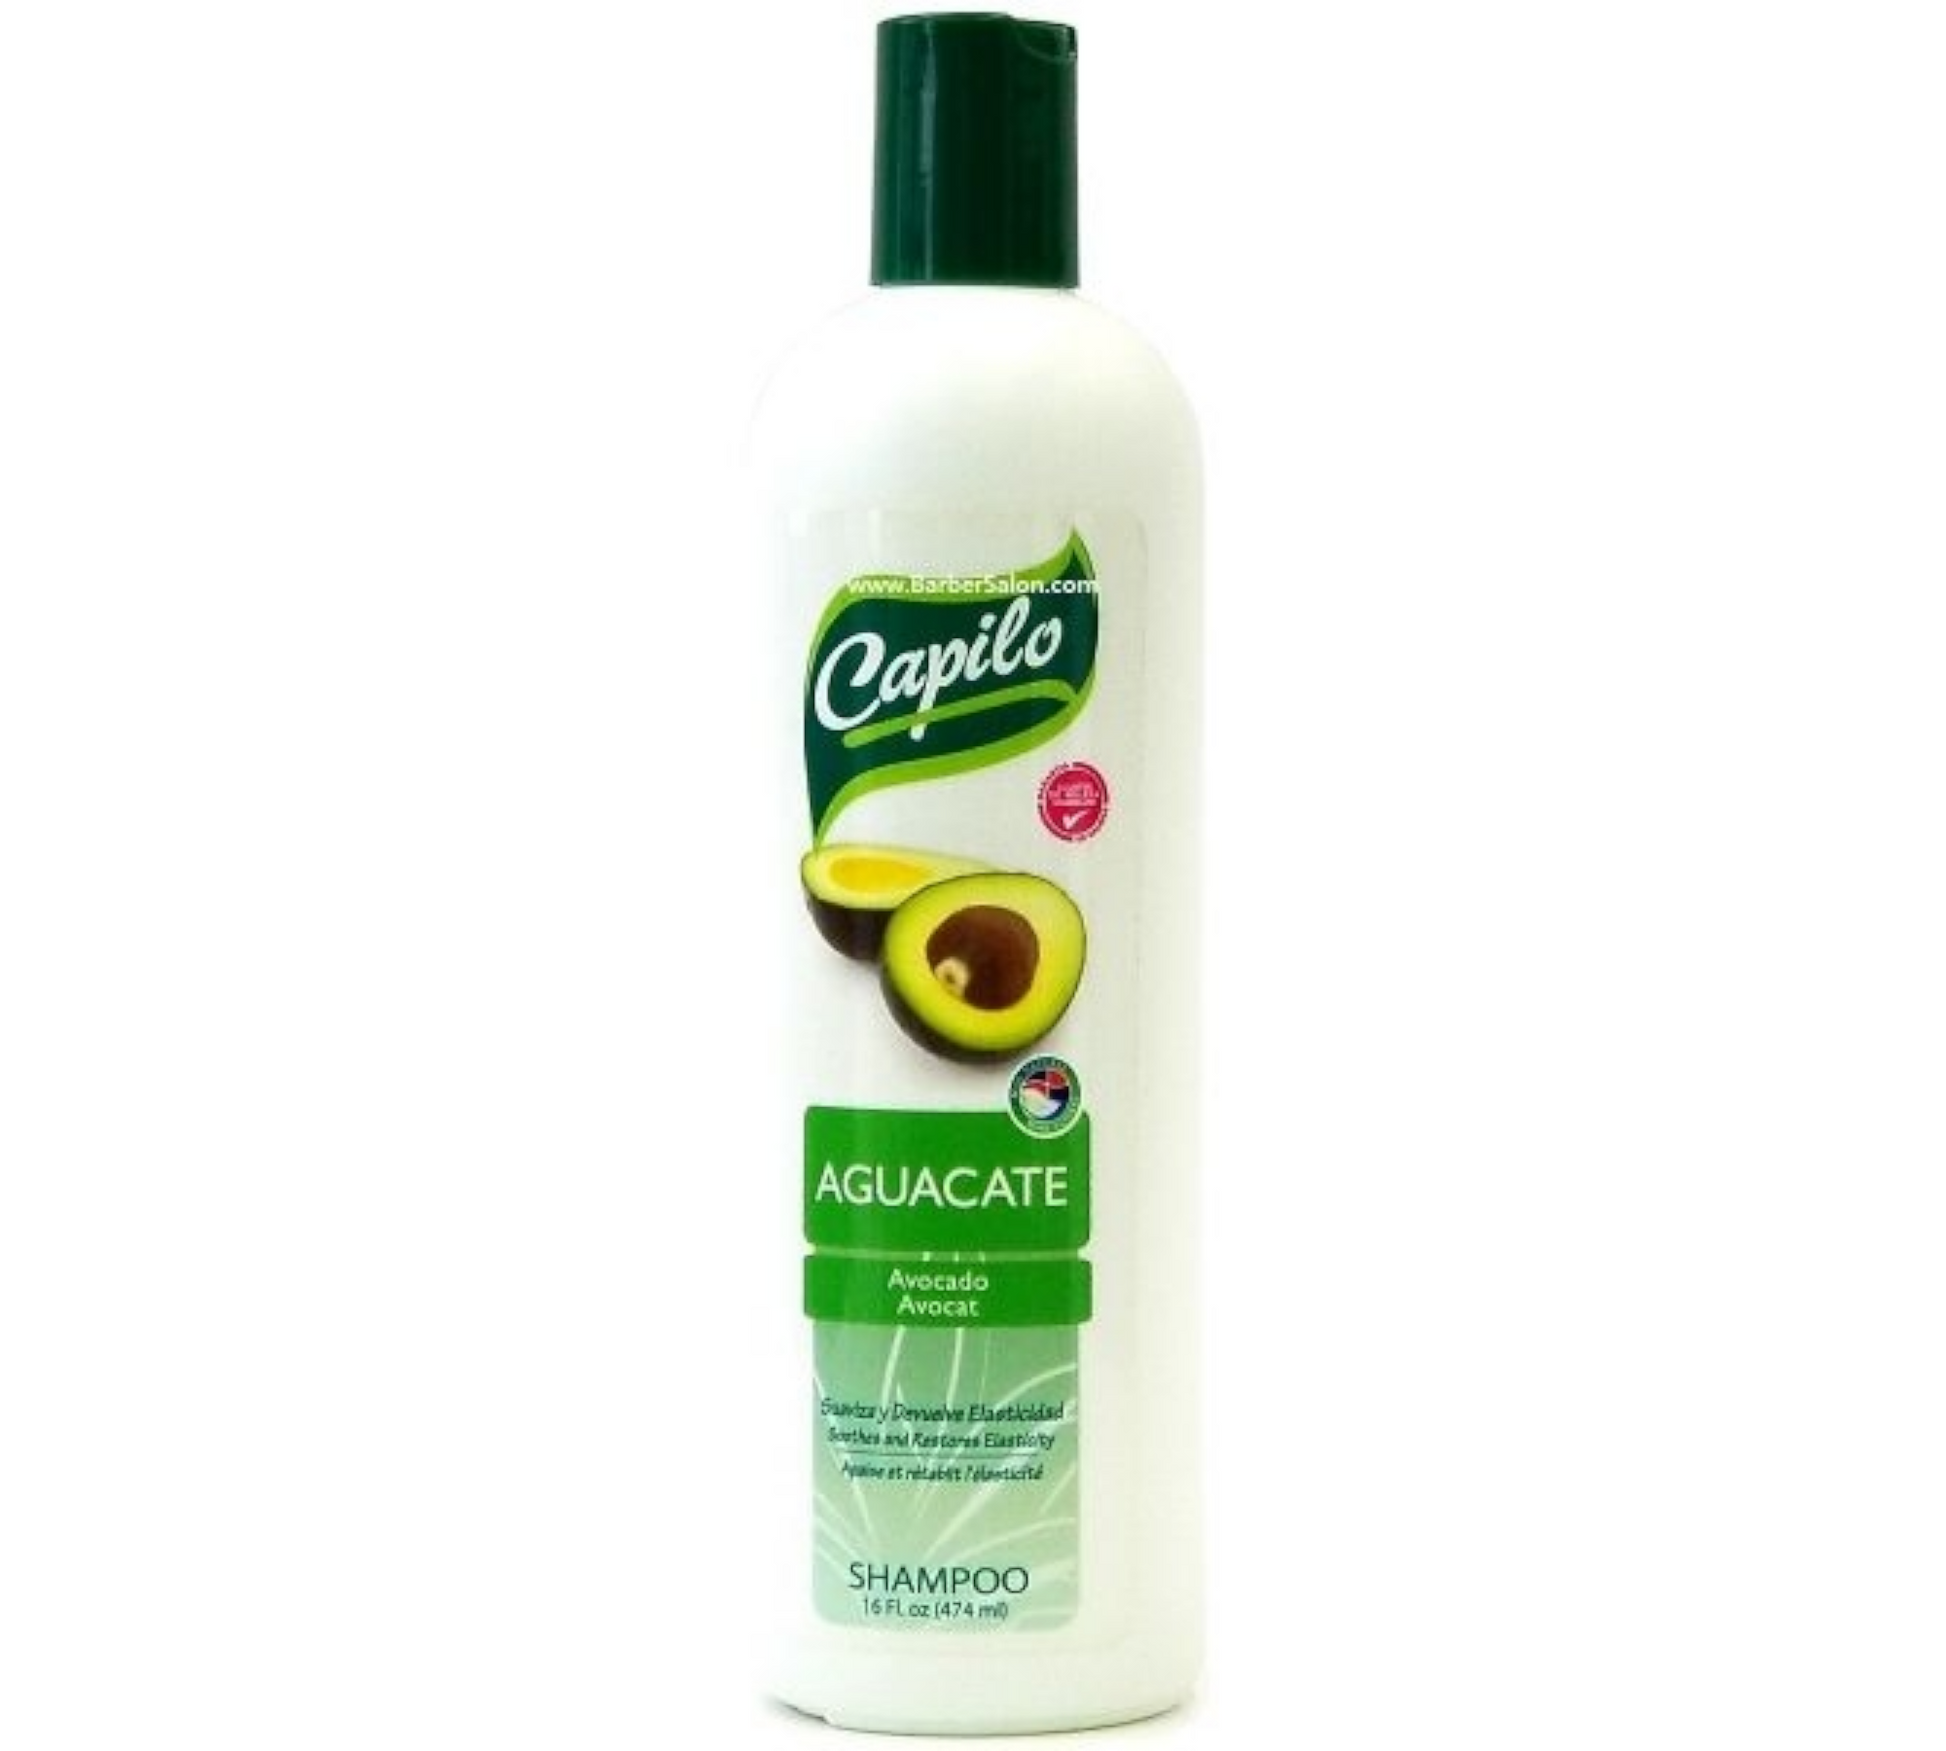 Capilo Cupid Beauty Supplies Shampoo Capilo Soothes and Restores Shampoo - Avocado (Aguacate) 16 oz